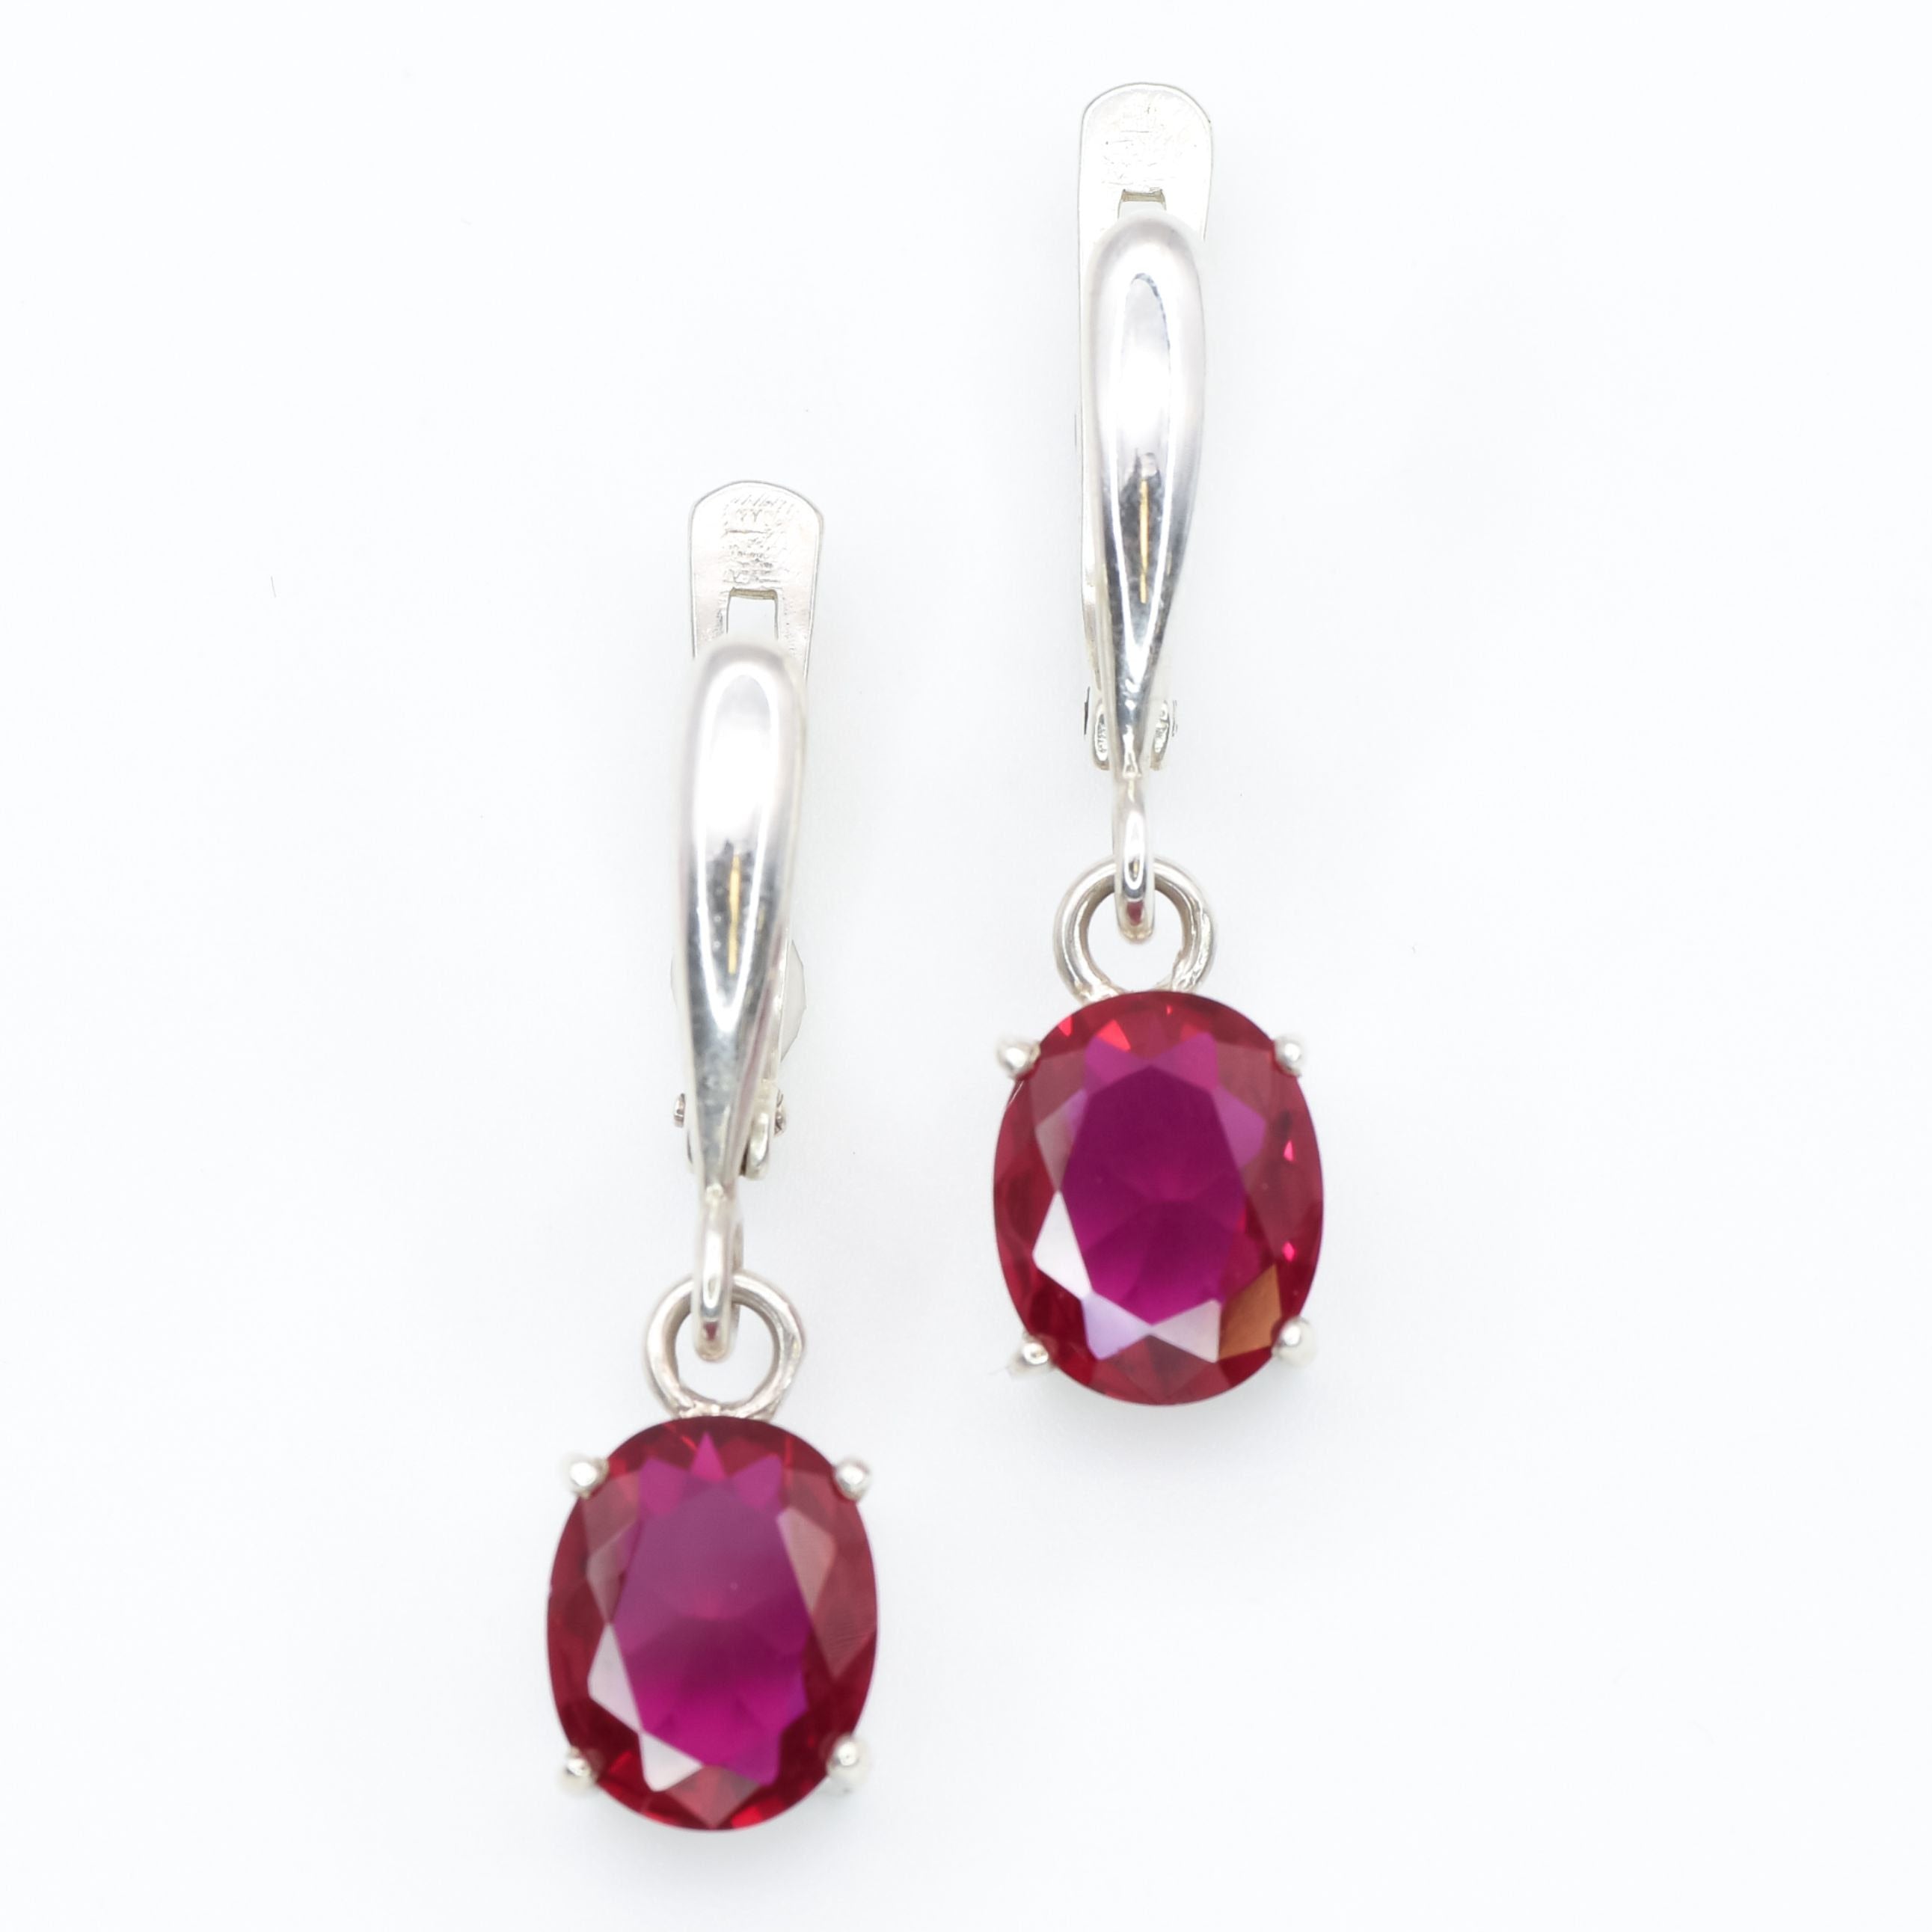 Ruby Earrings, Created Ruby, Dangling Earrings, Long Red Earrings, Drop Earrings, Solid Silver Earrings